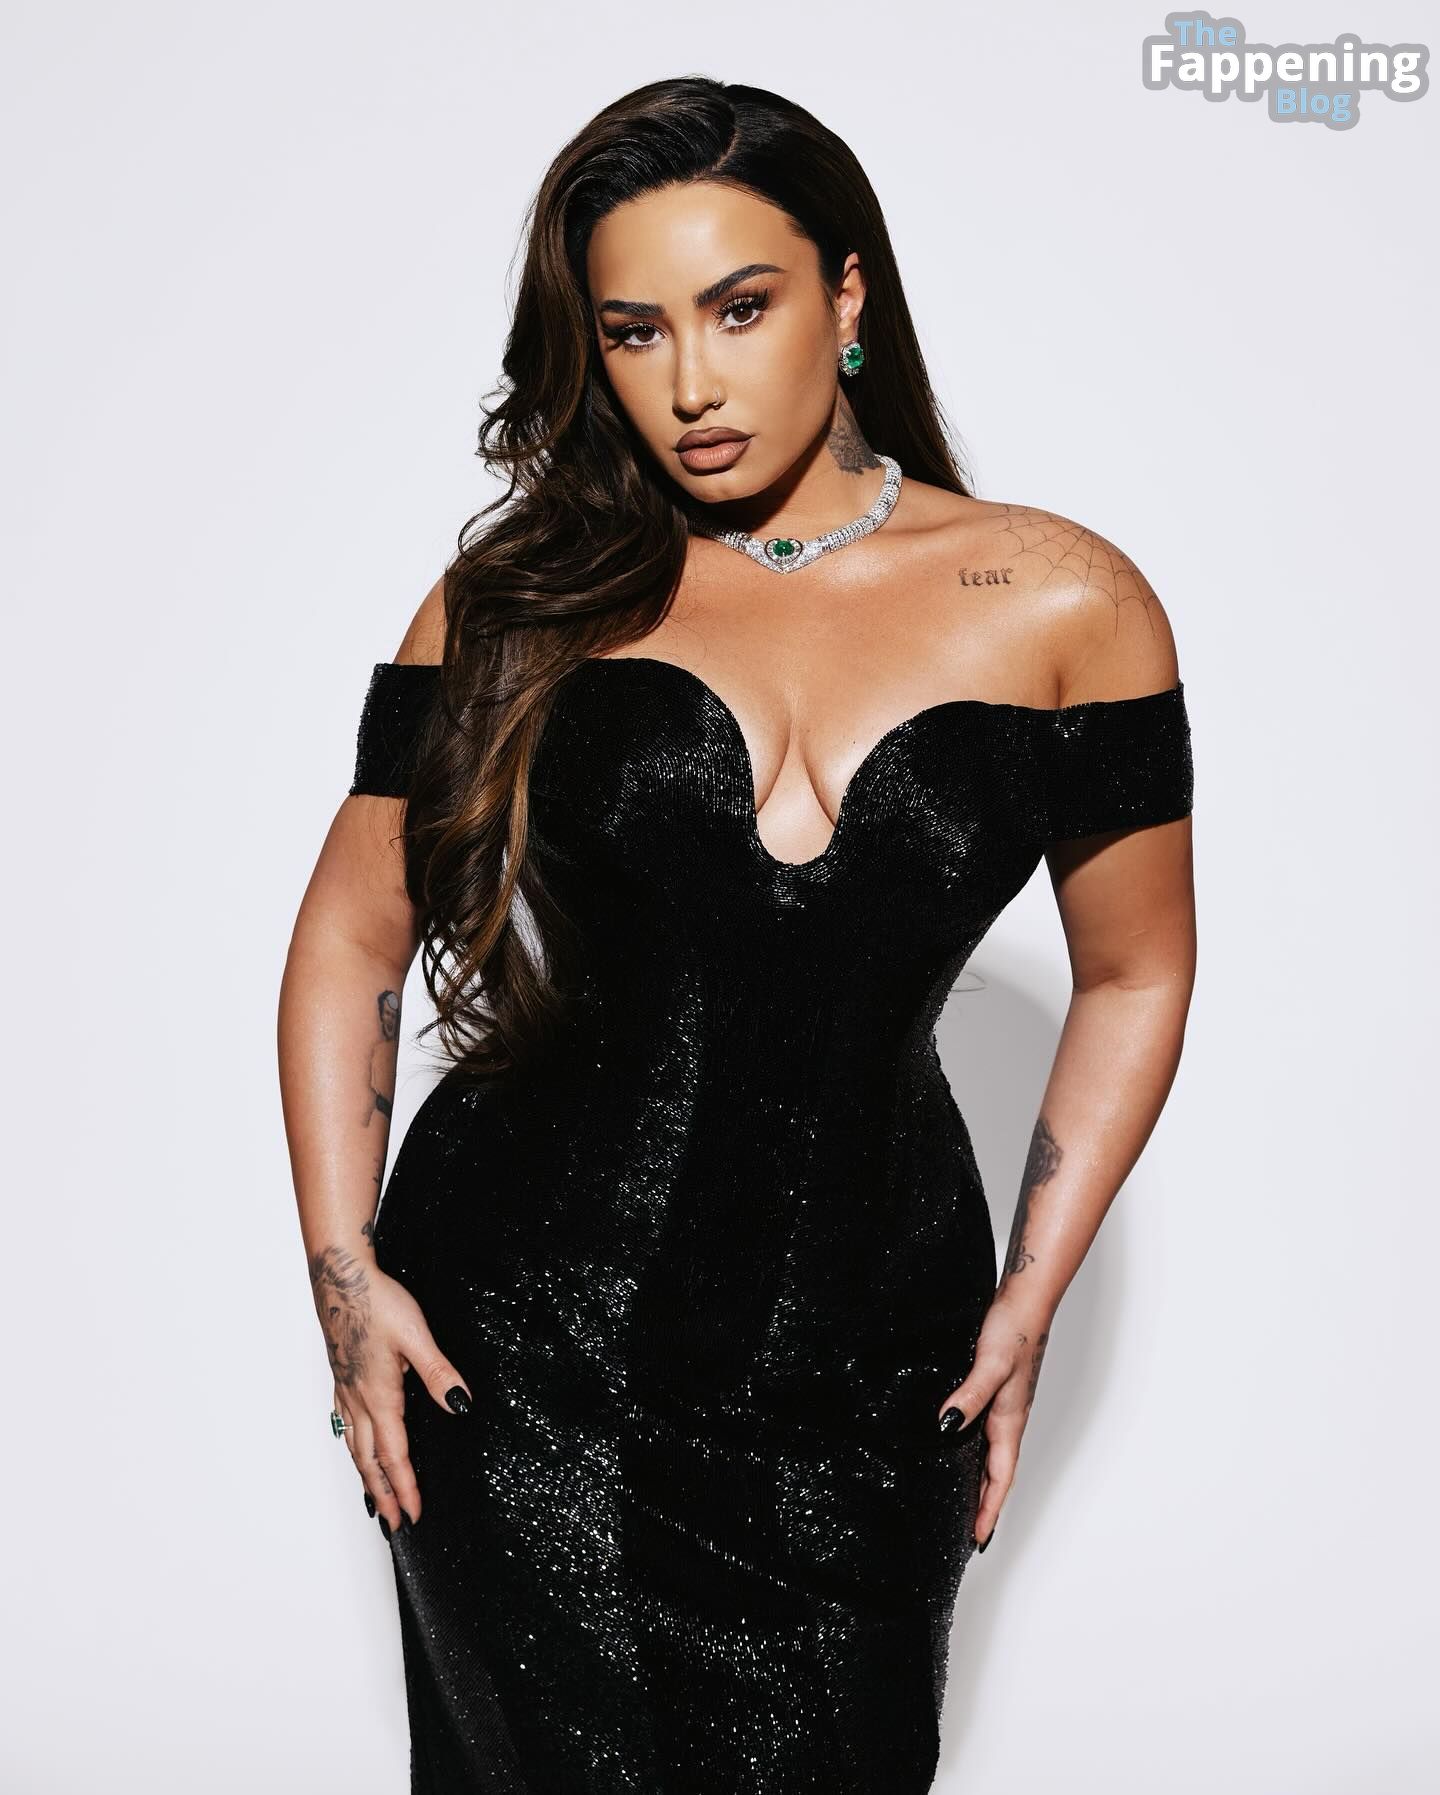 Demi-Lovato-Sexy-15-The-Fappening-Blog.jpg